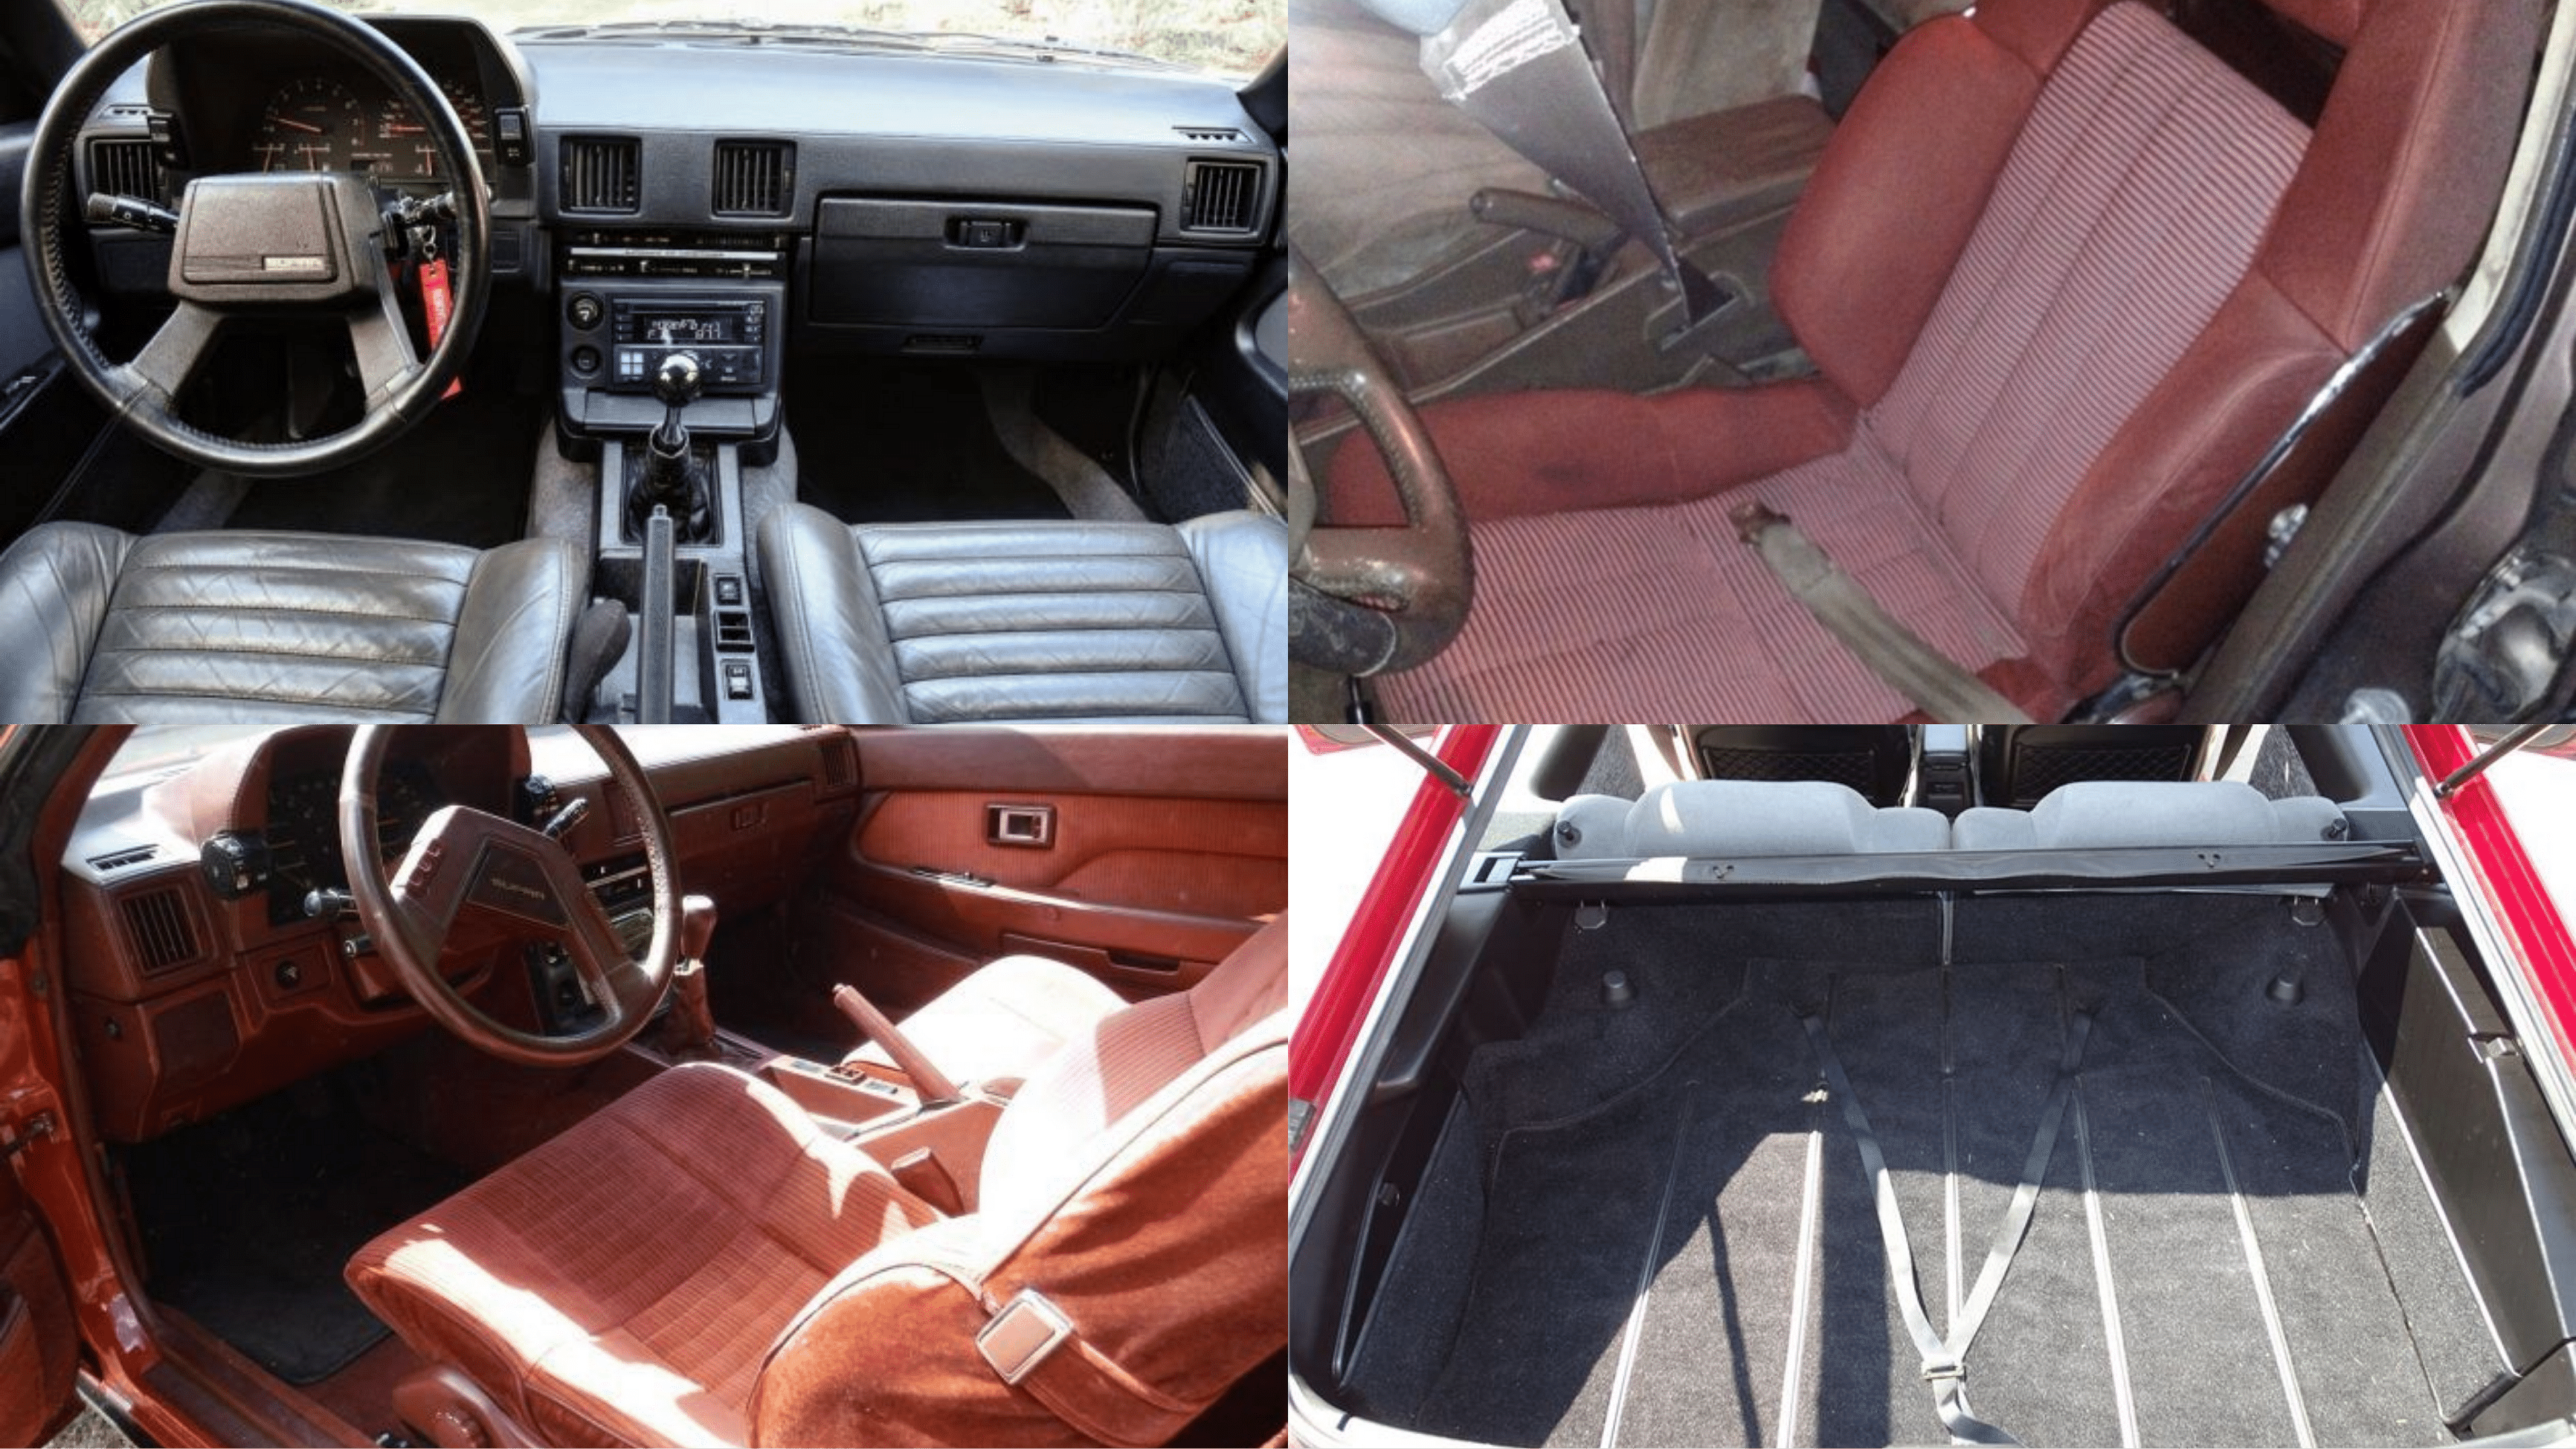 Toyota Supra MKII interior - dashboard, seats, cargo space